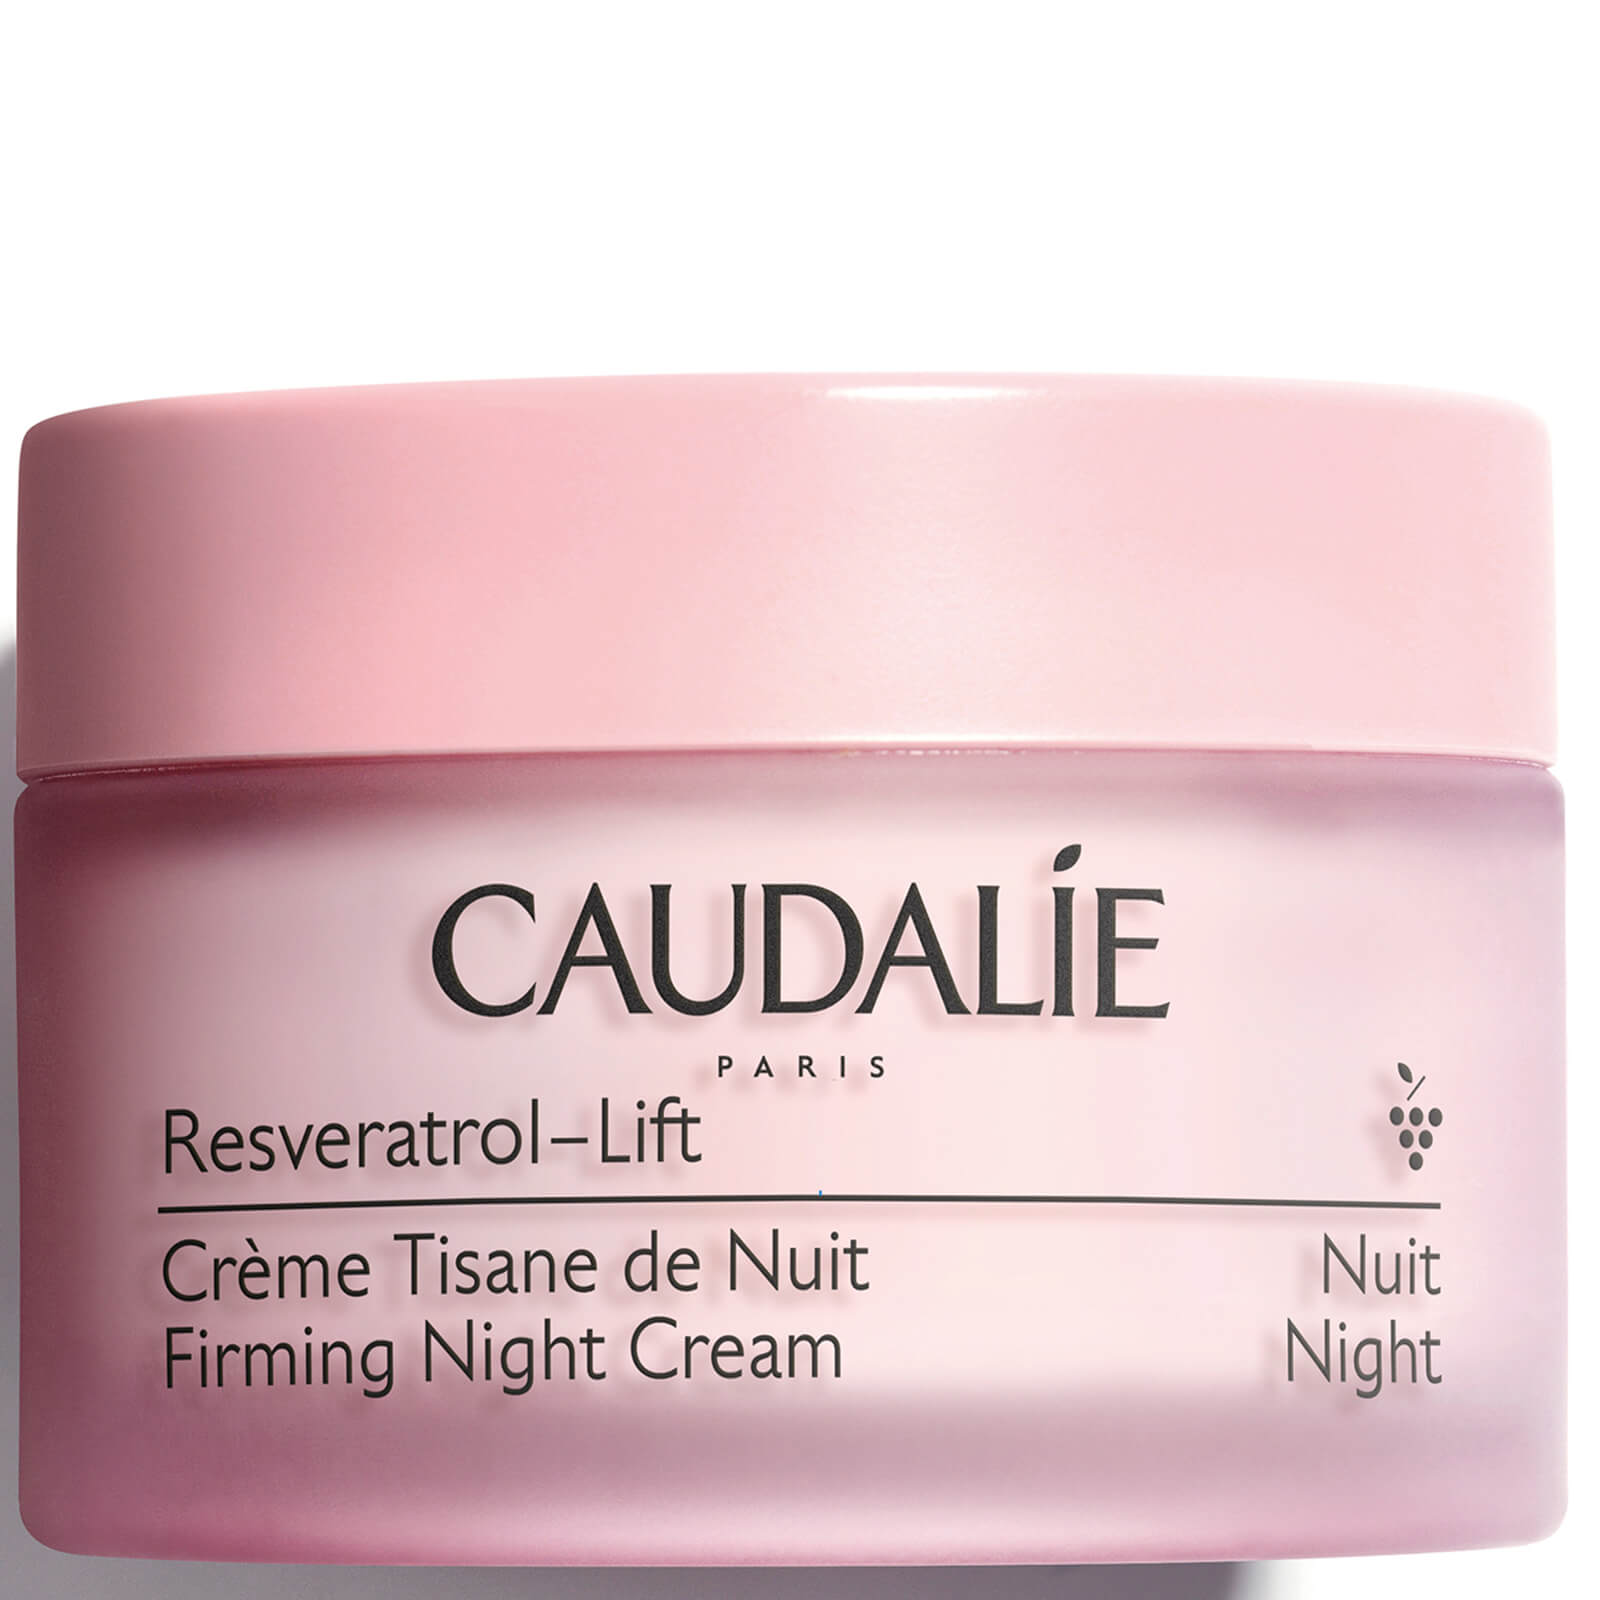 Caudalie Resvératrol [lift] Firming Night Cream